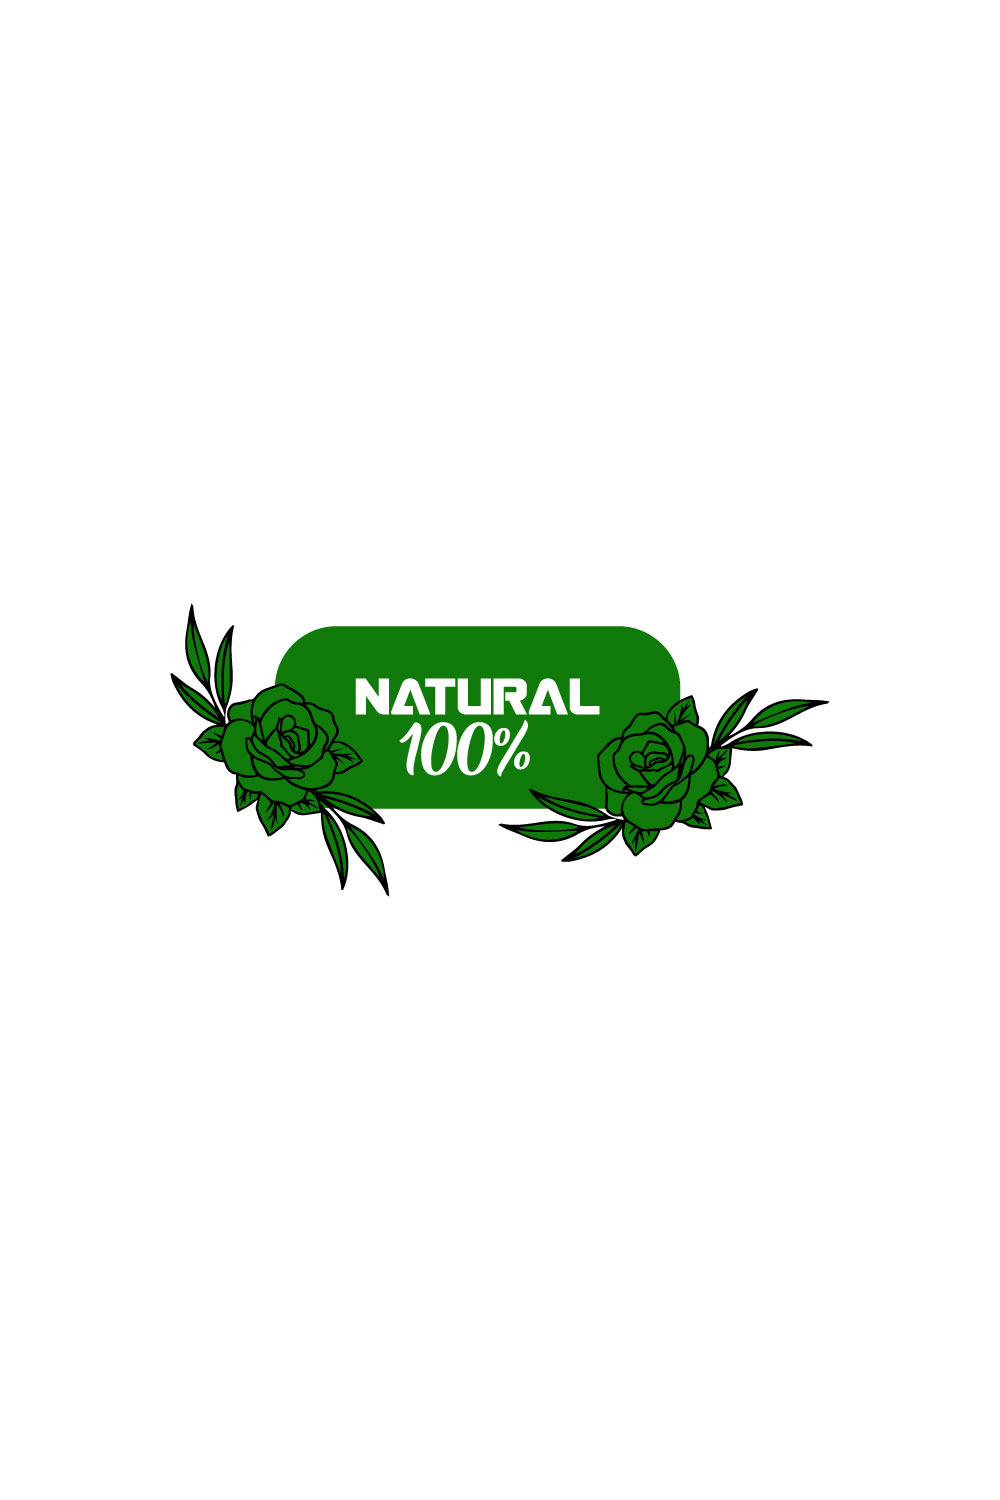 Free 100 natural logo pinterest preview image.